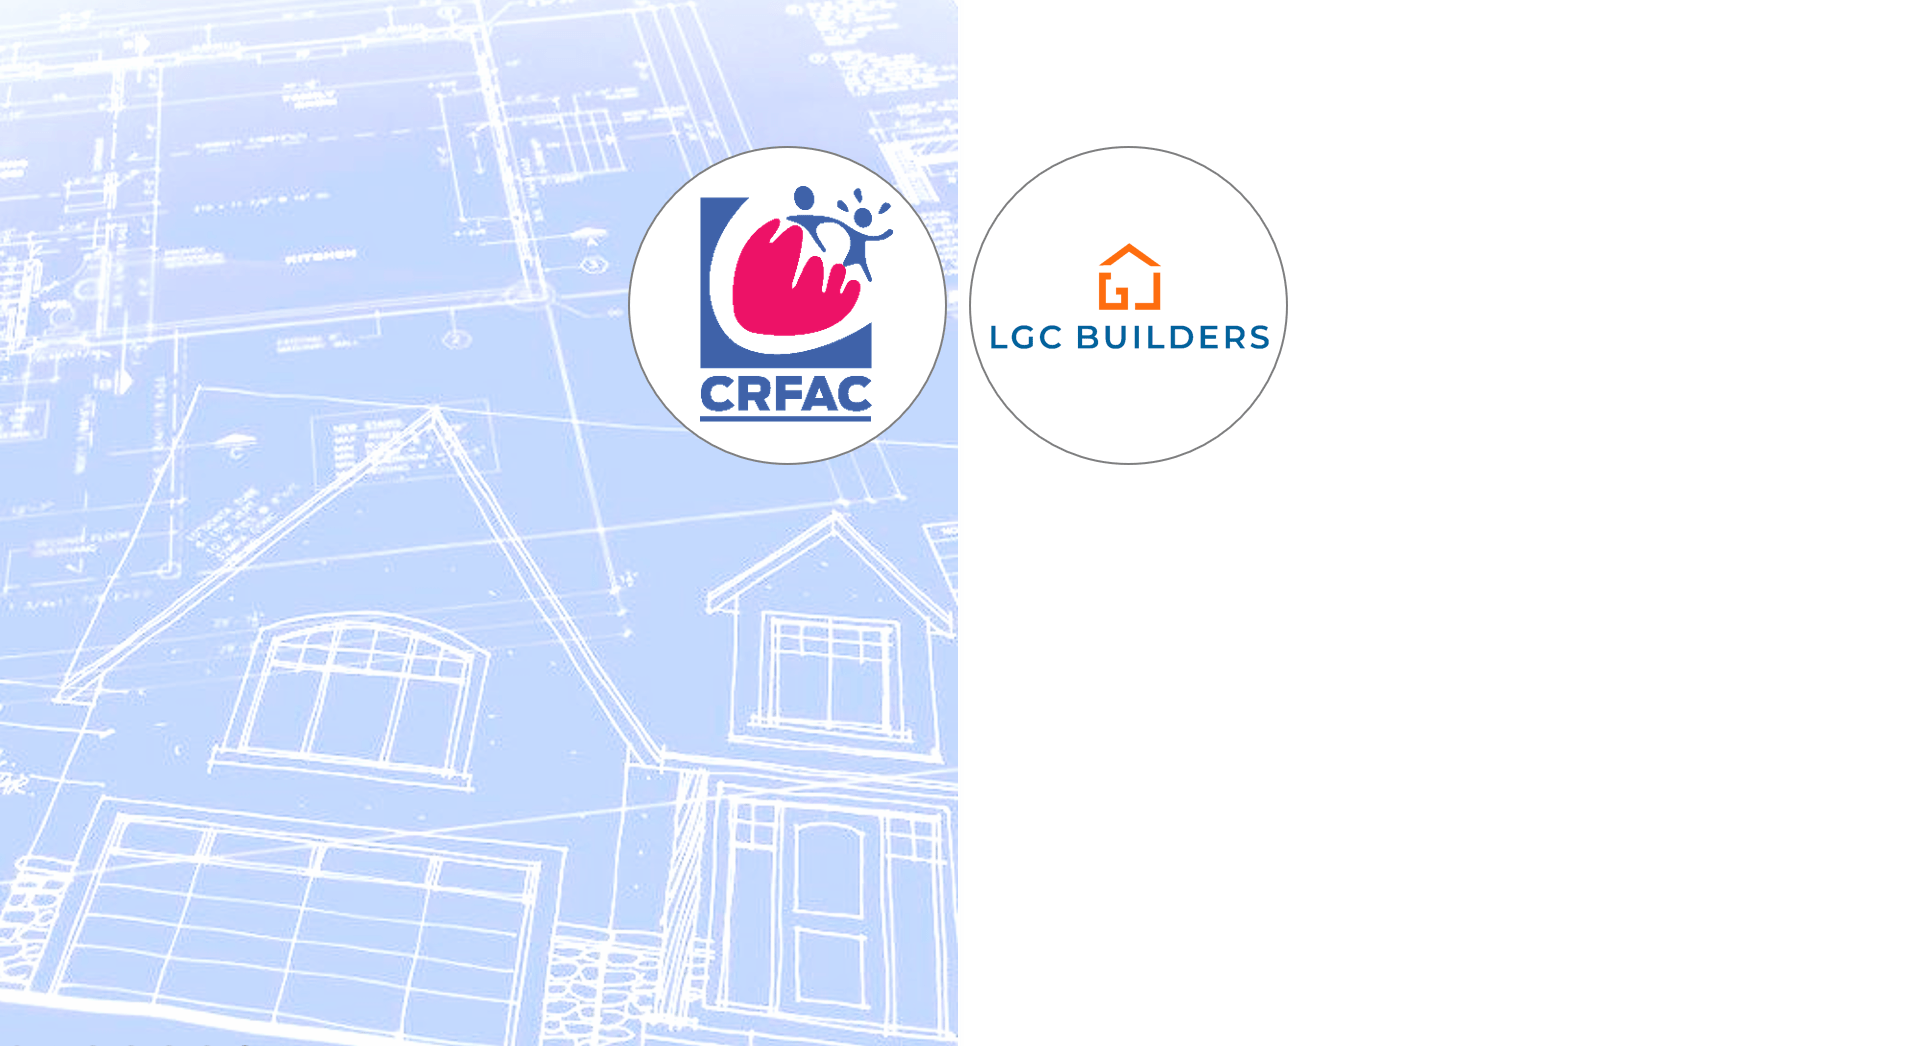 LGC builders